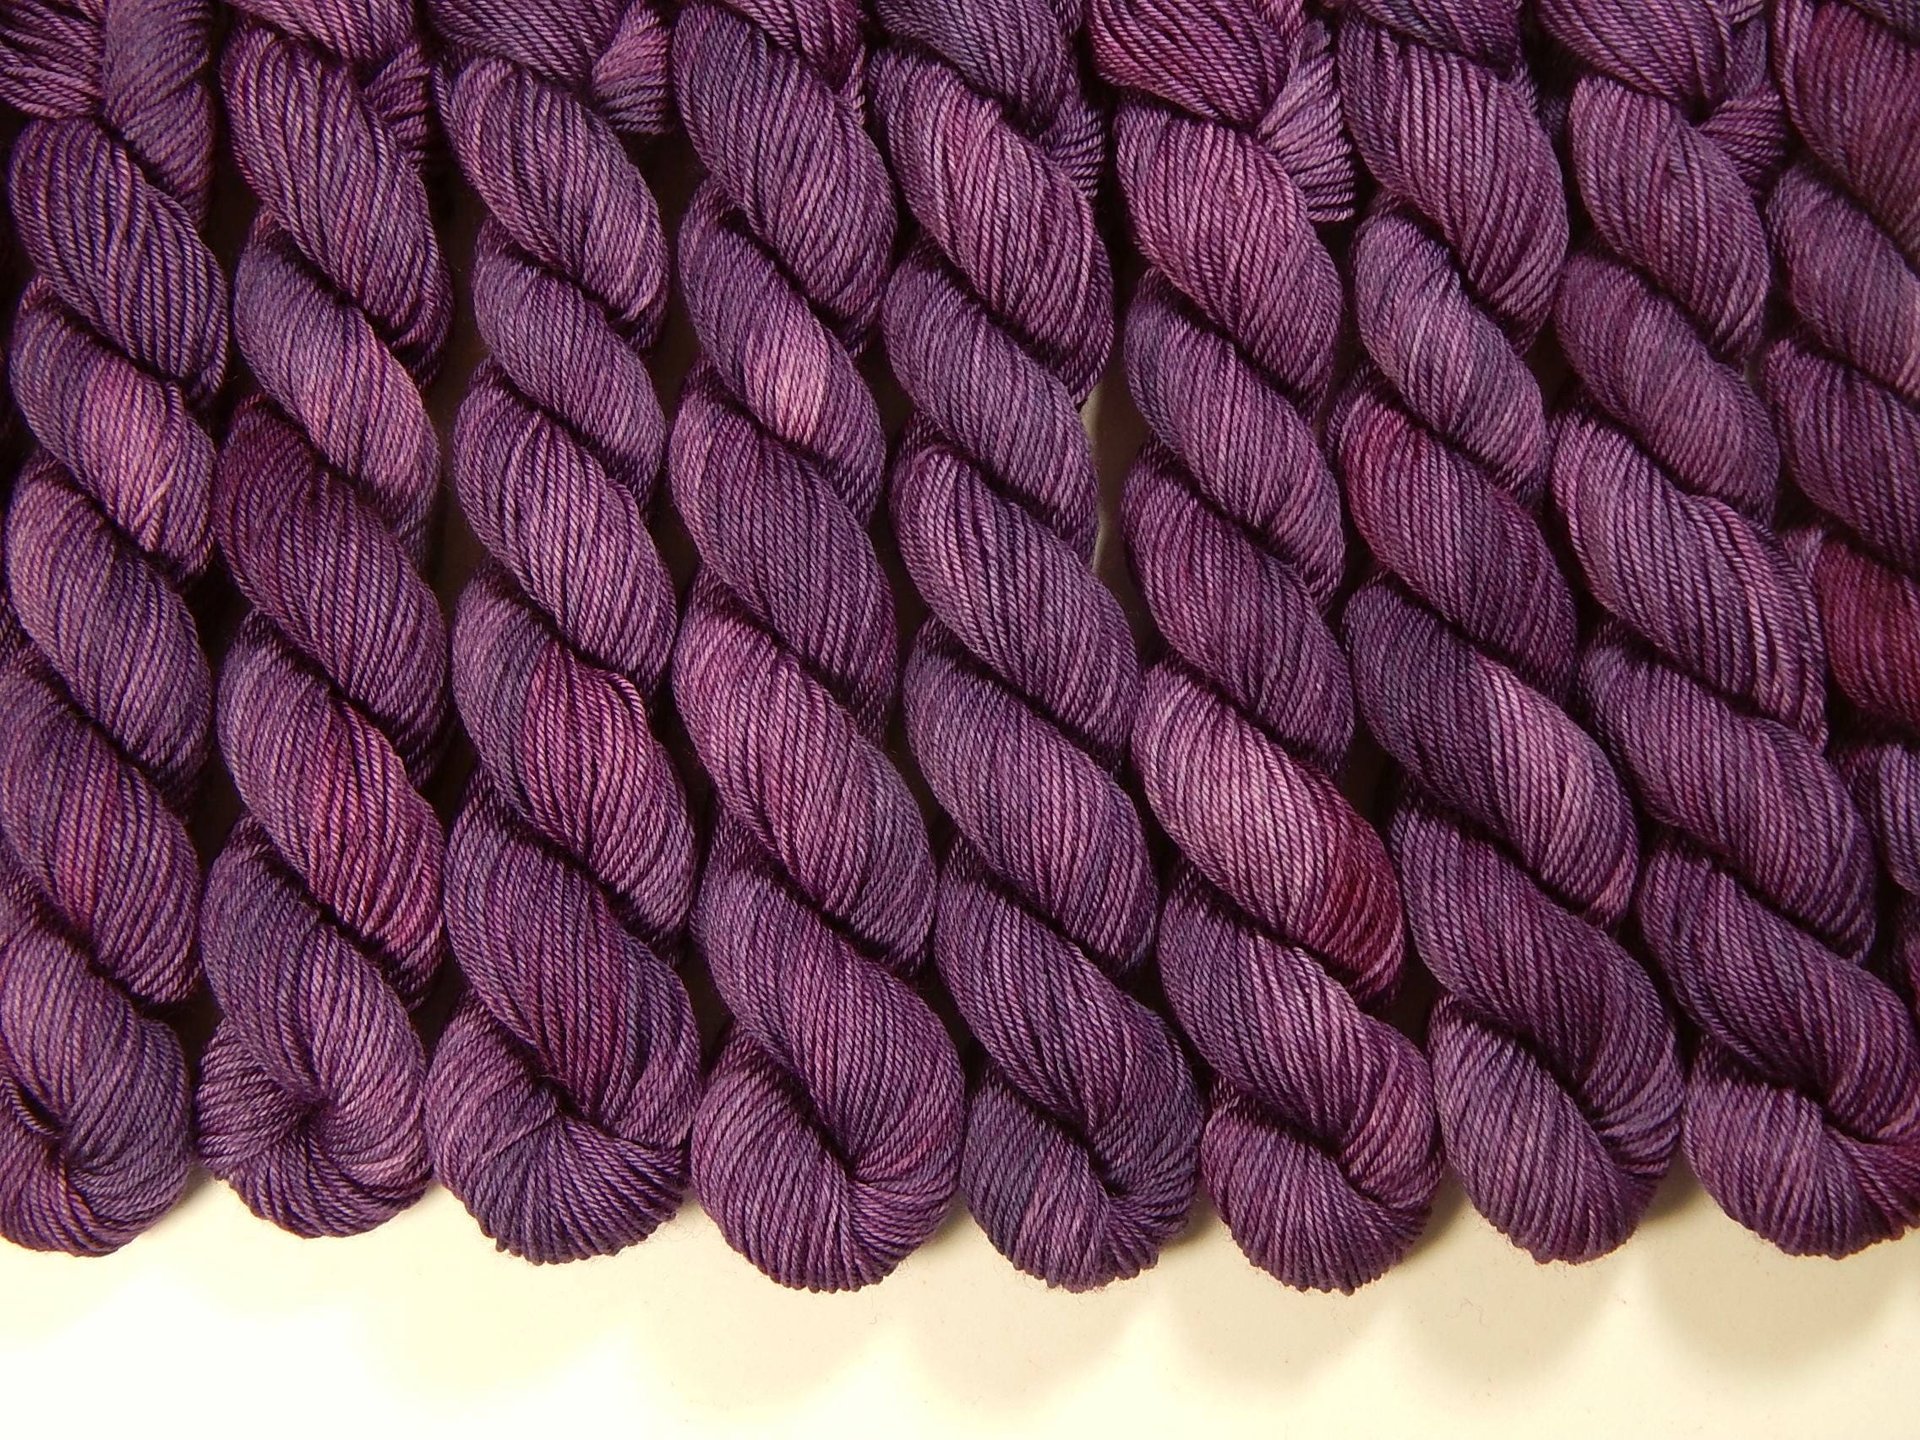 Mini Skeins Hand Dyed Yarn, Sock Weight 4 Ply Superwash 100% Merino Wool - Deep Lilac Tonal - Fingering Weight Sock Yarn, Purple Mini Skein